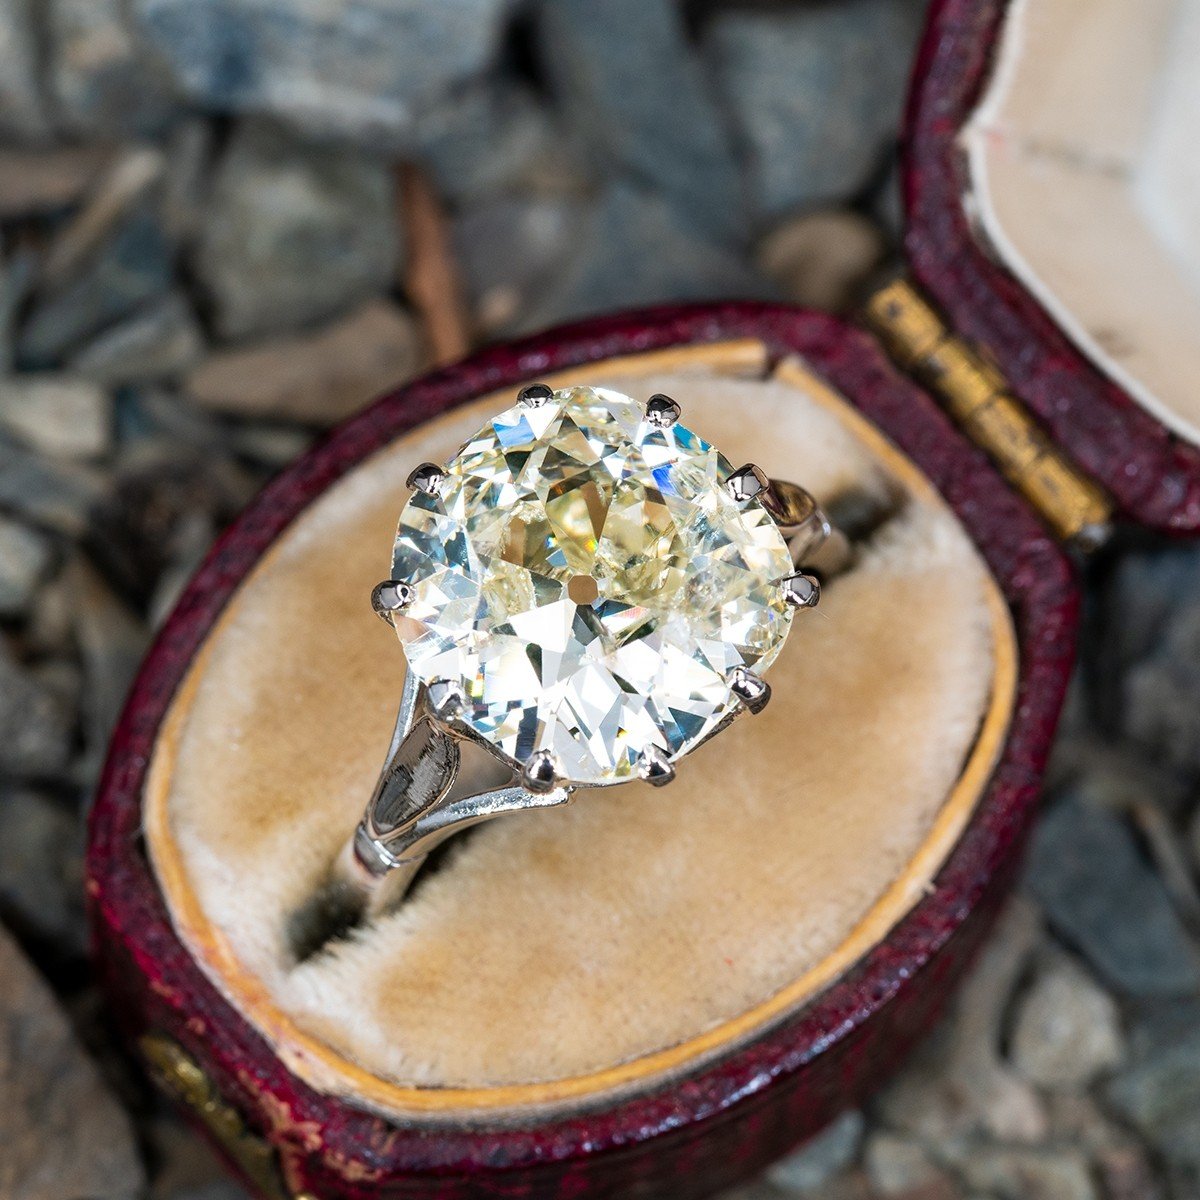 4 Carat Old Mine Cut Diamond Solitaire Engagement Ring Platinum 4 44ct N I1